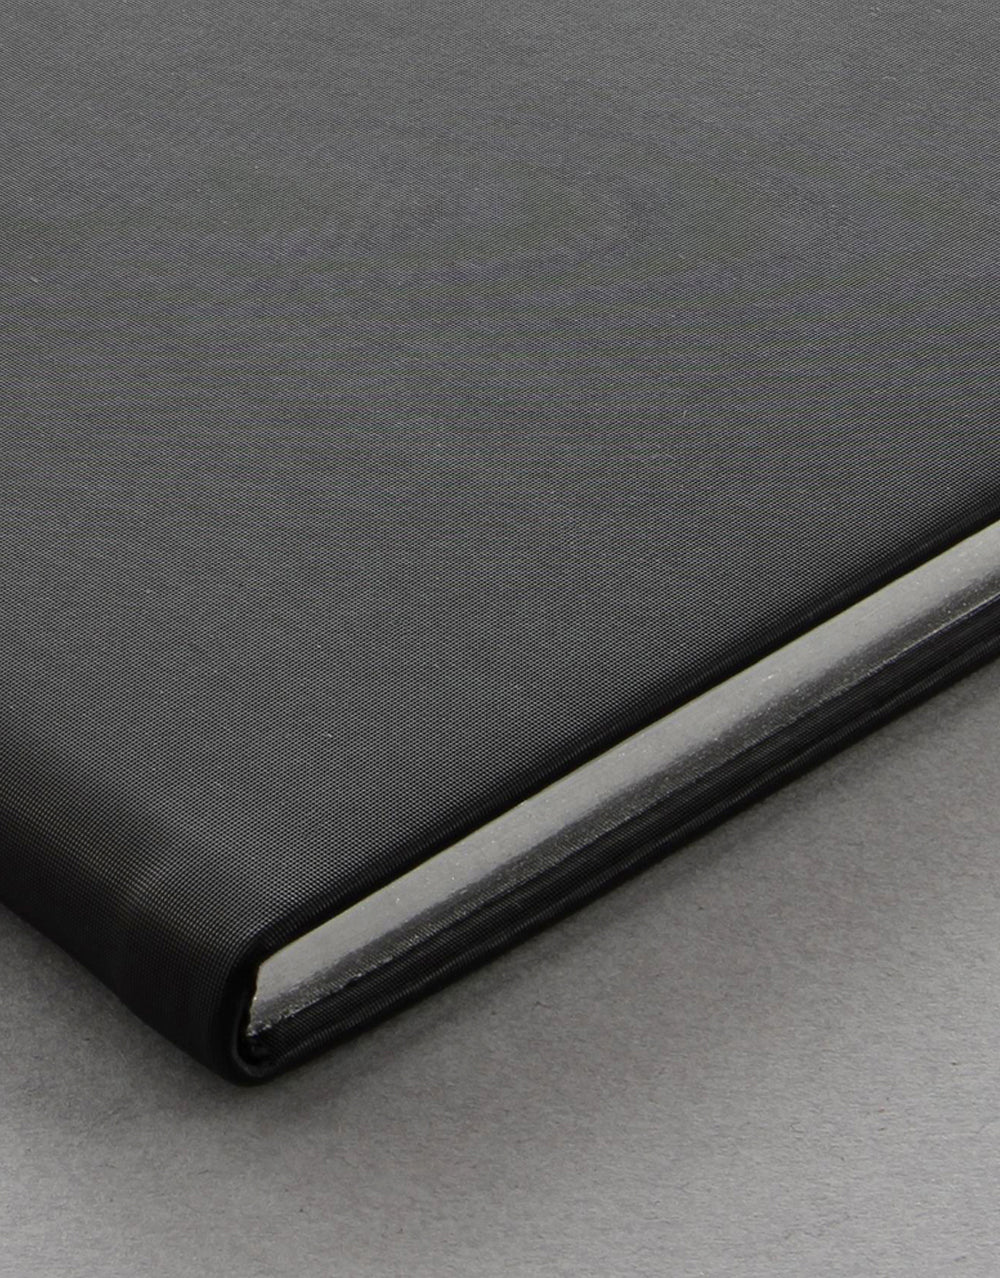 Dazzle A6 Ruled Notebook Black#colour_black